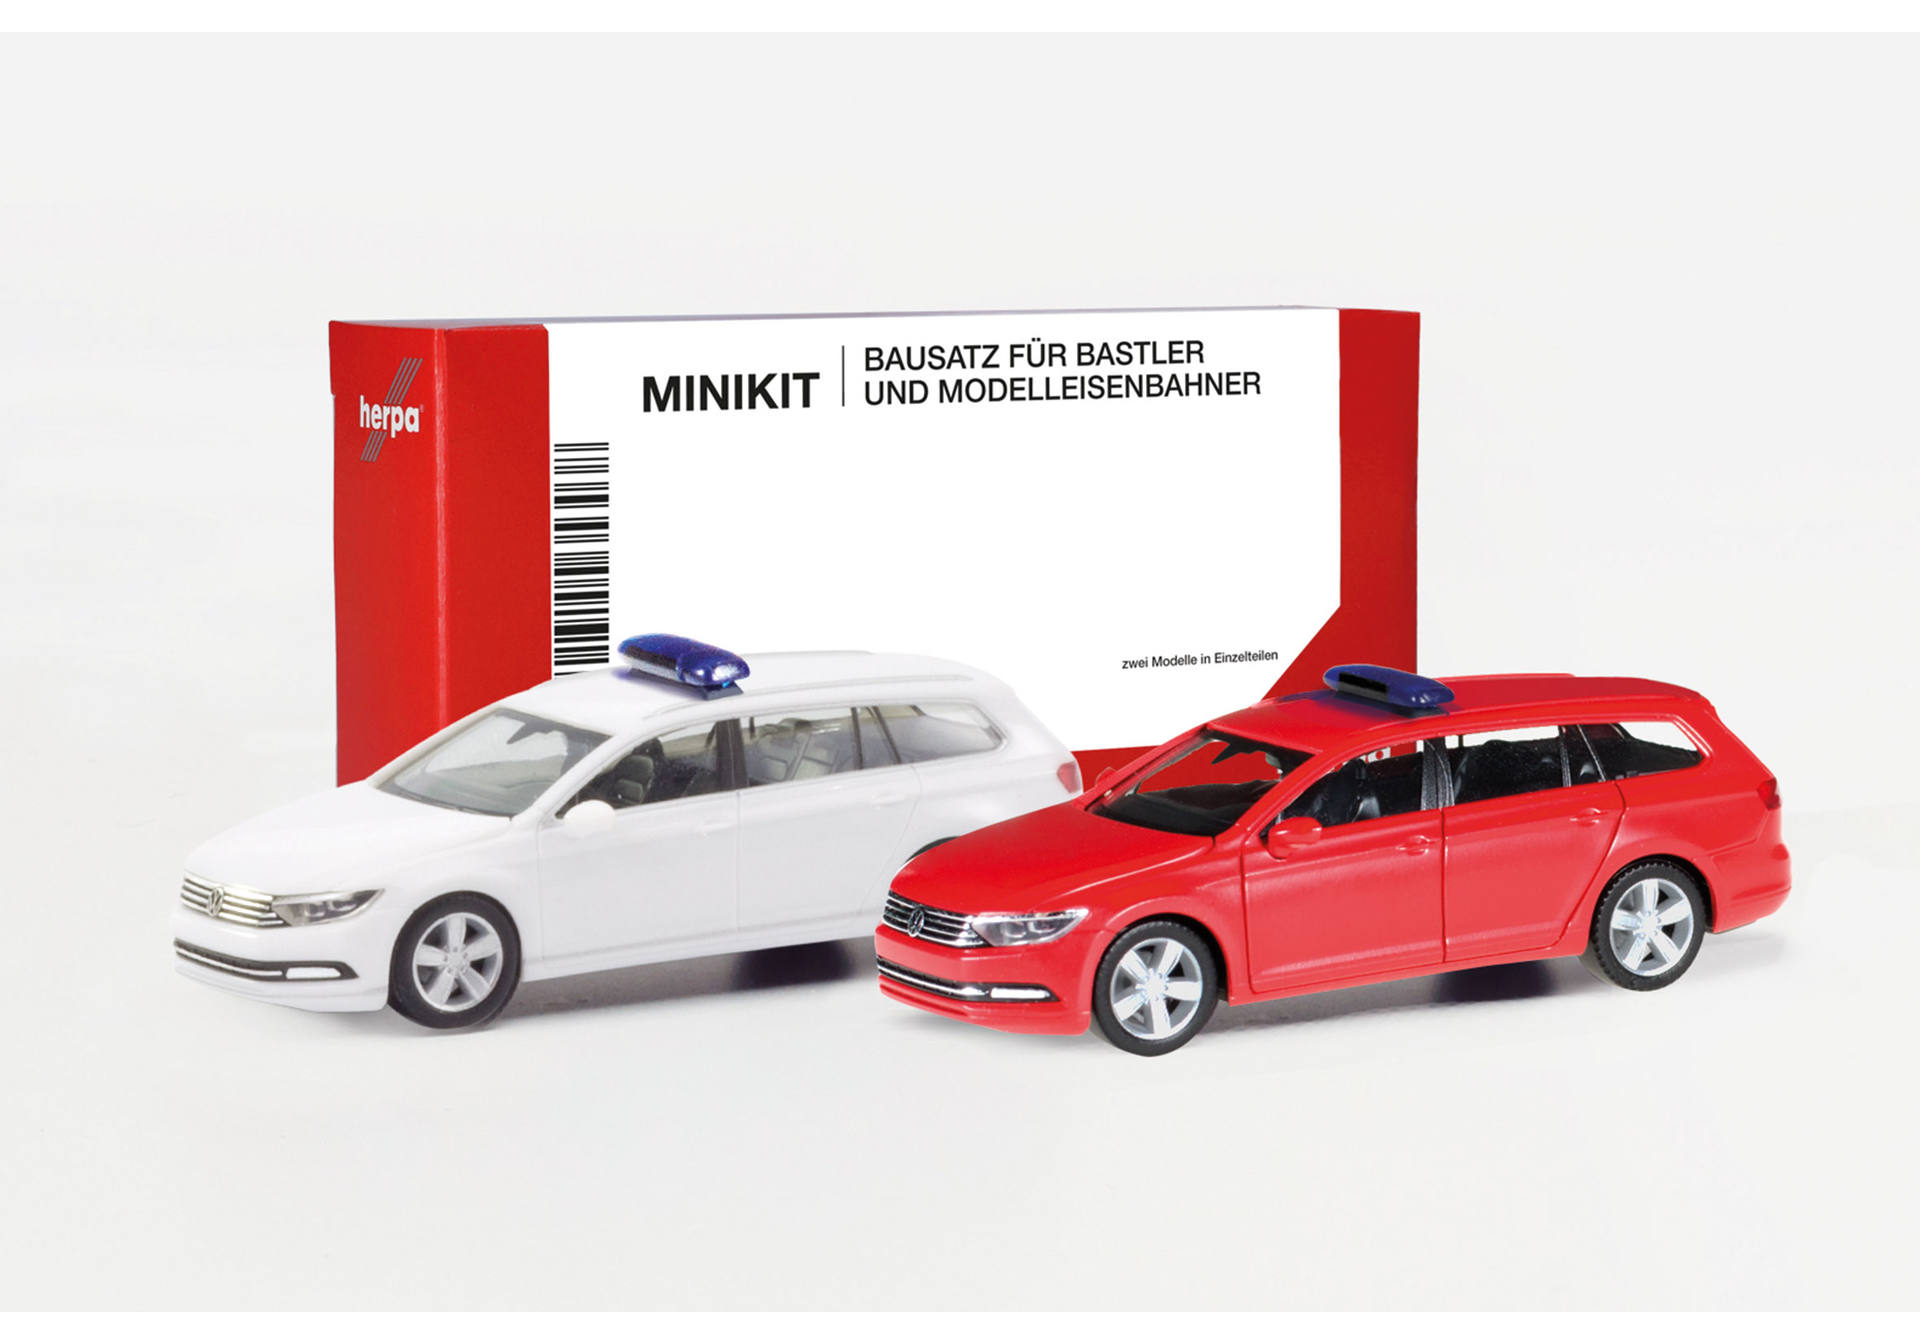 Herpa MiniKit: 2 x Volkswagen (VW) Passat Variant mit Warnbalken